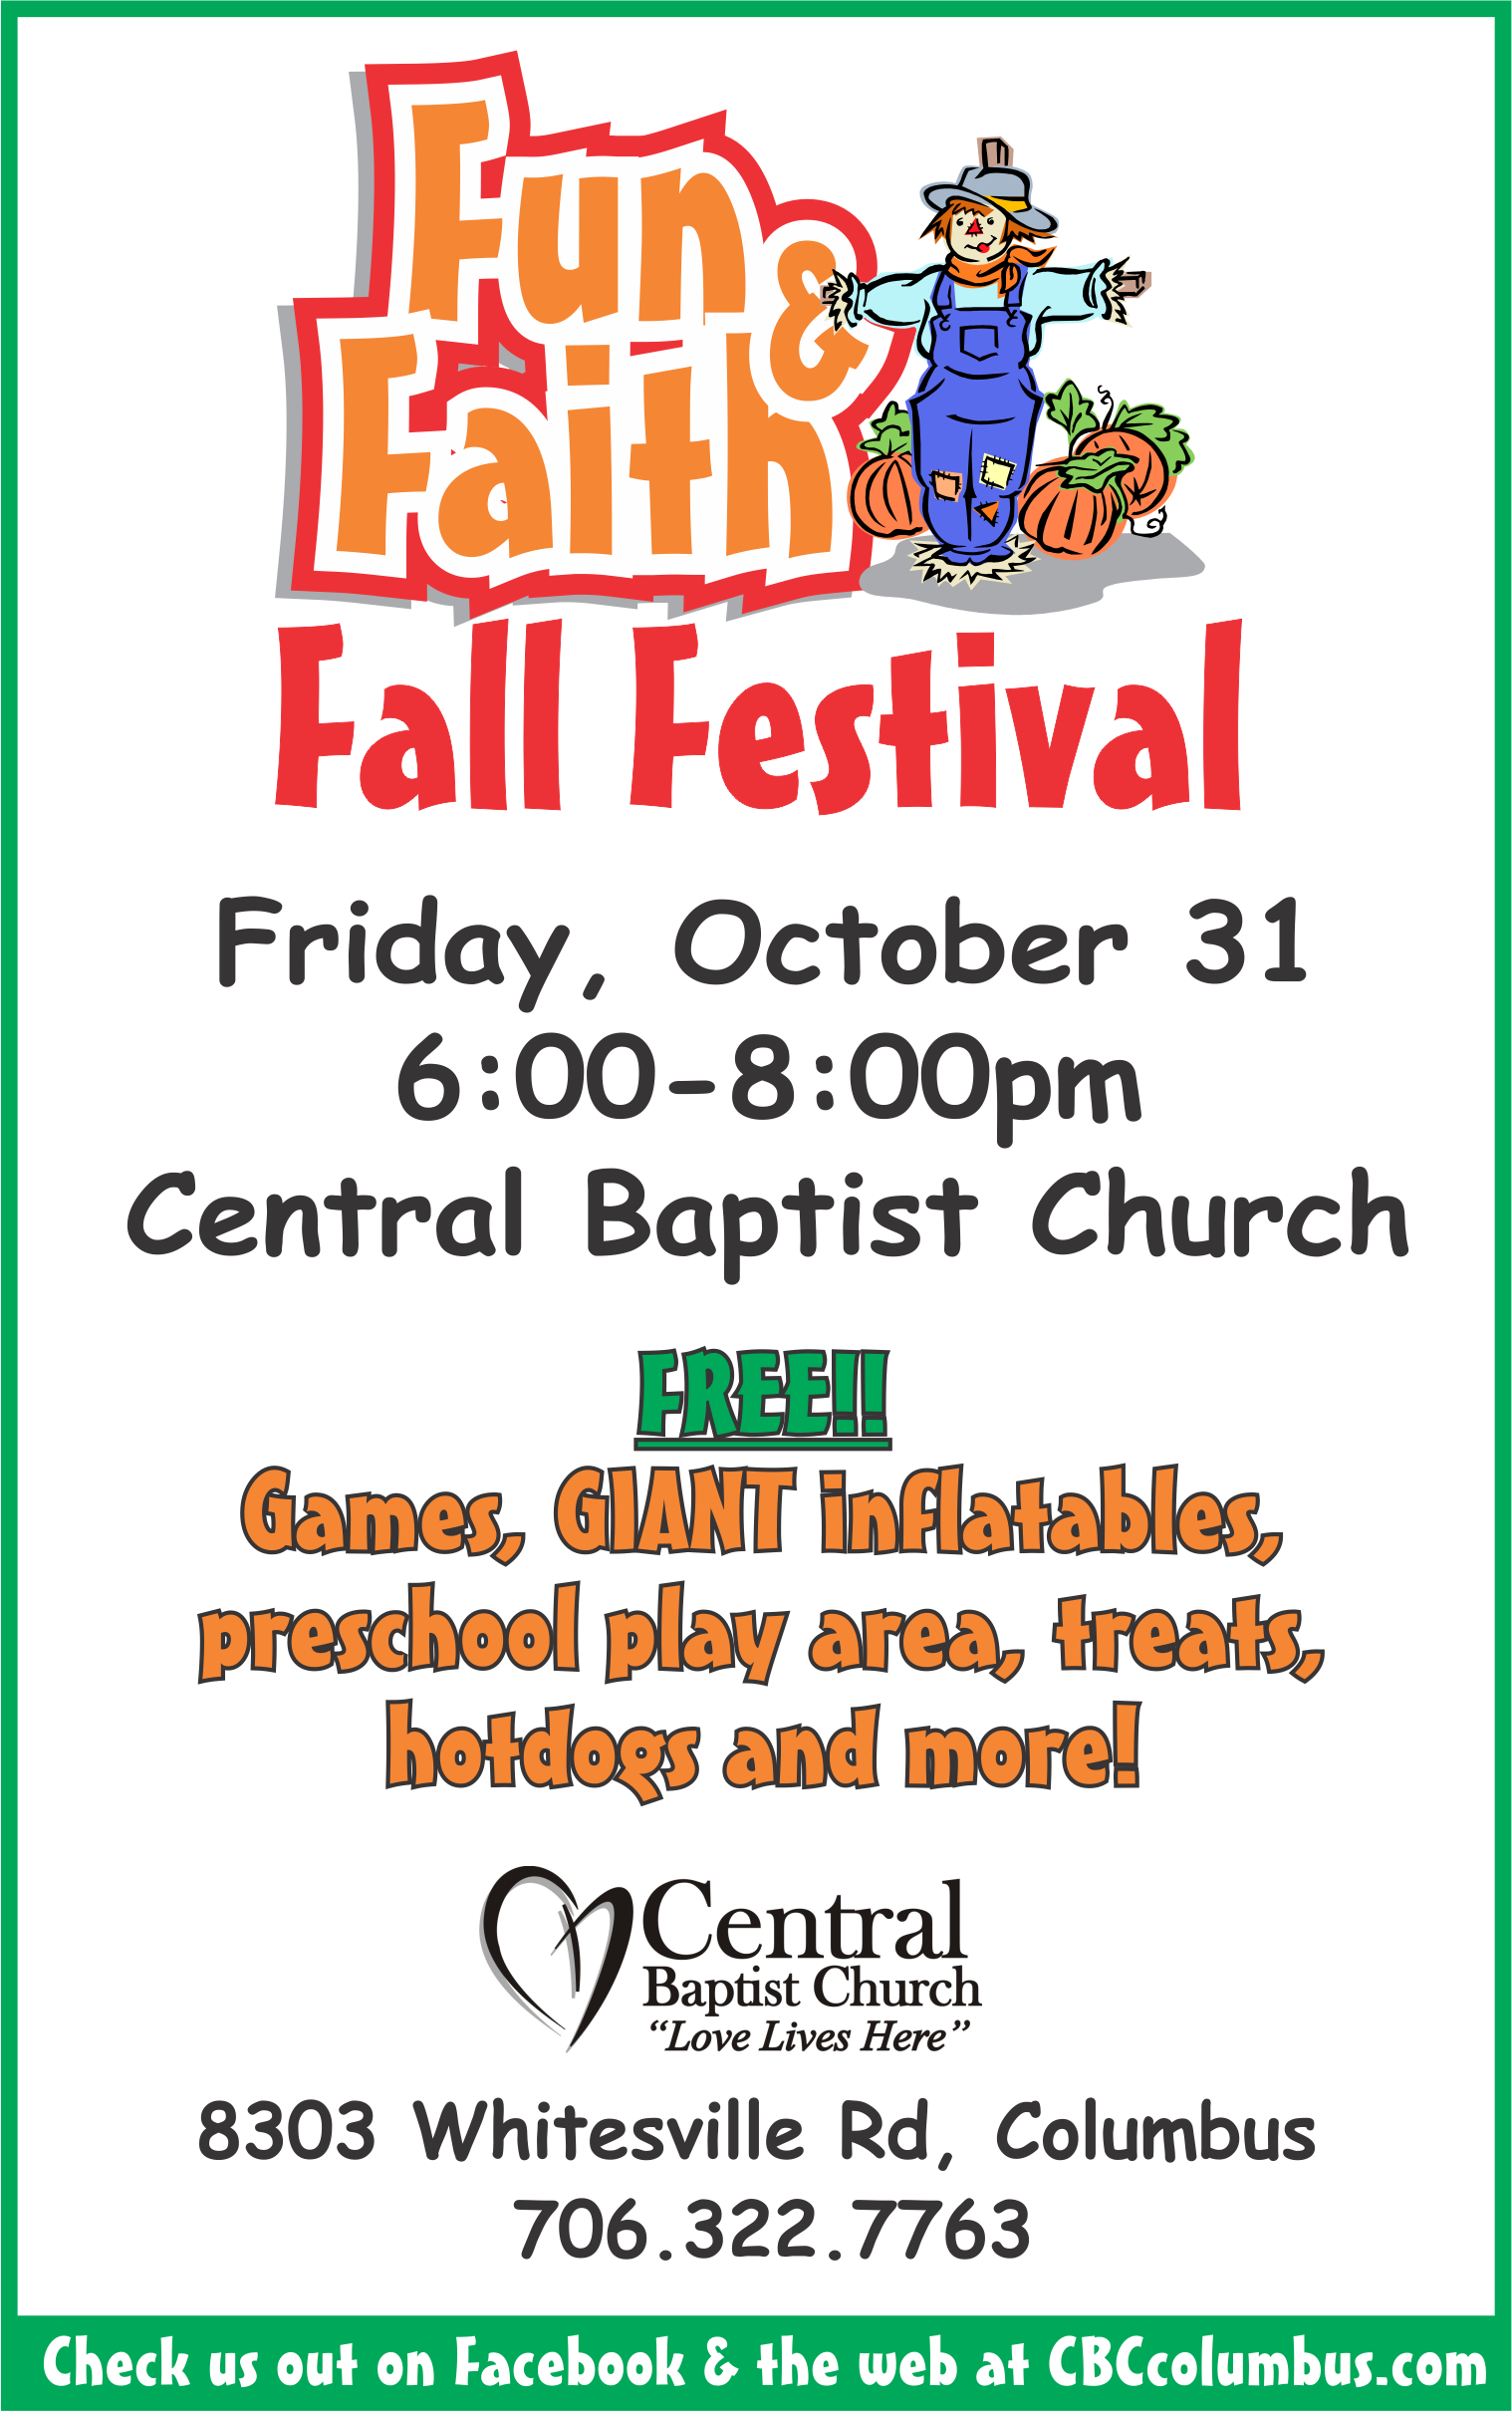 Fun & Faith Fall Festival at Central Baptist Church